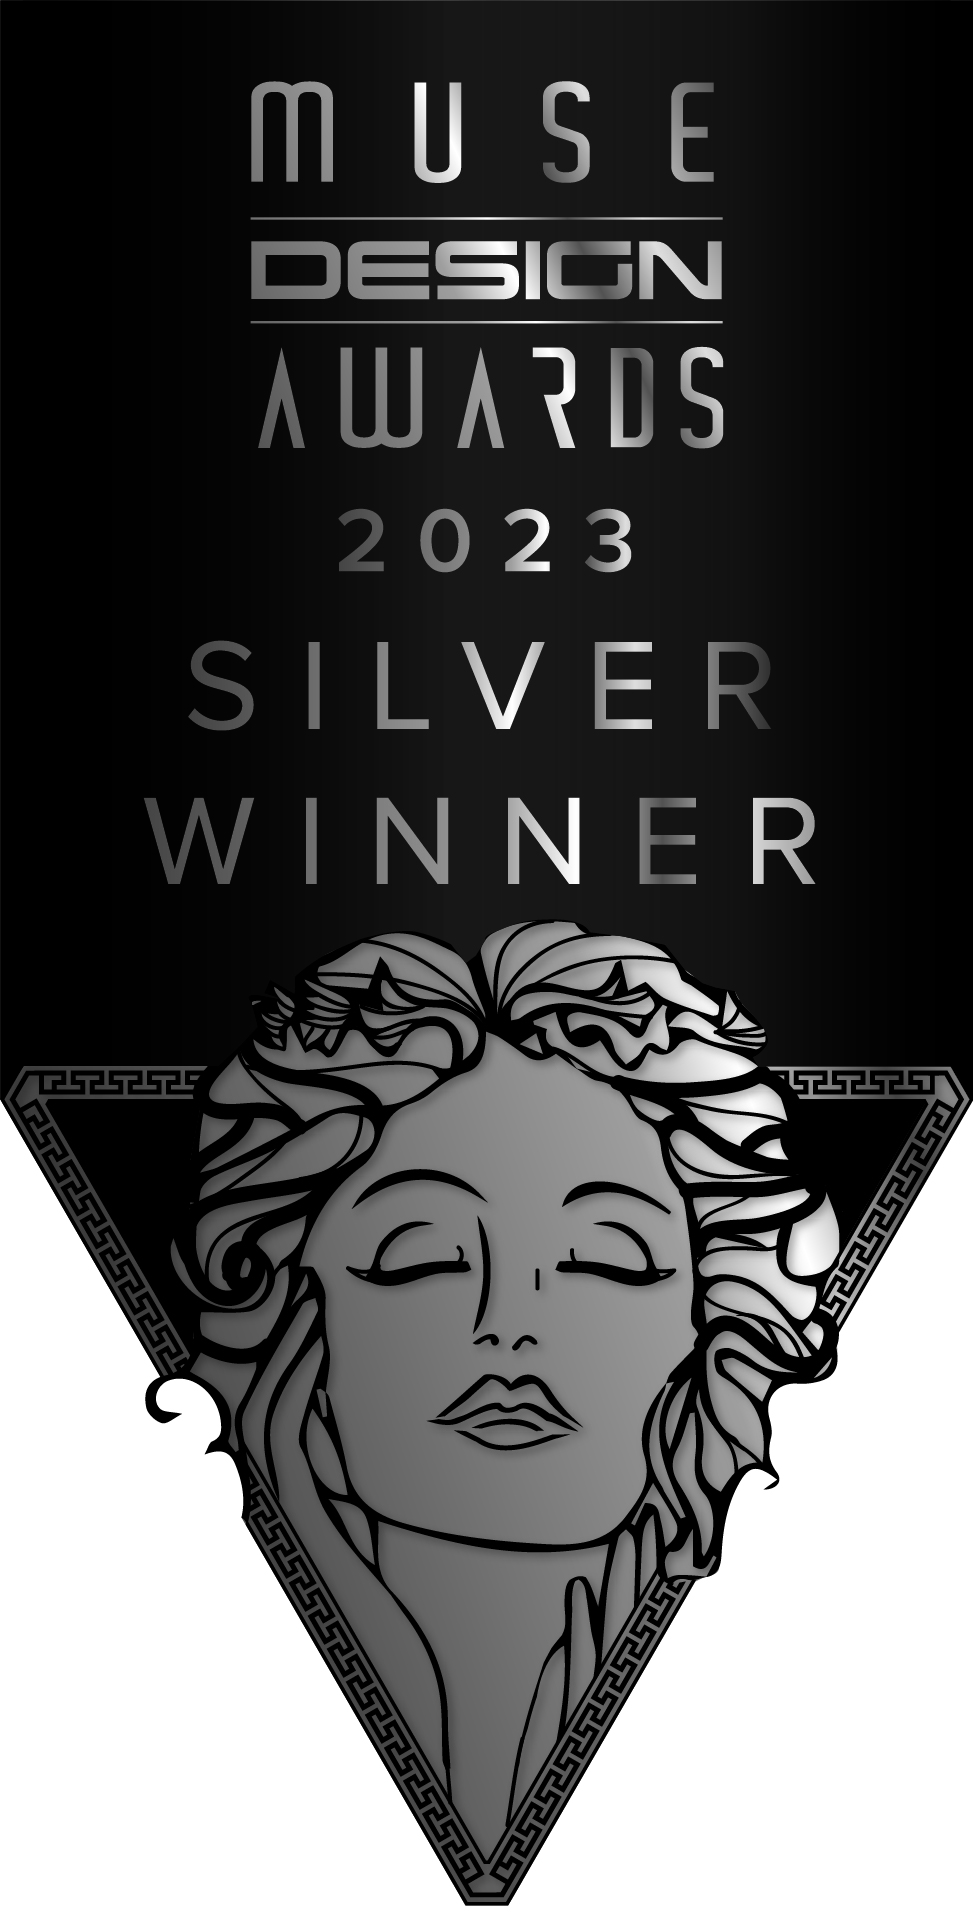 MUSE Design Awards 2023 Silver Winner logo